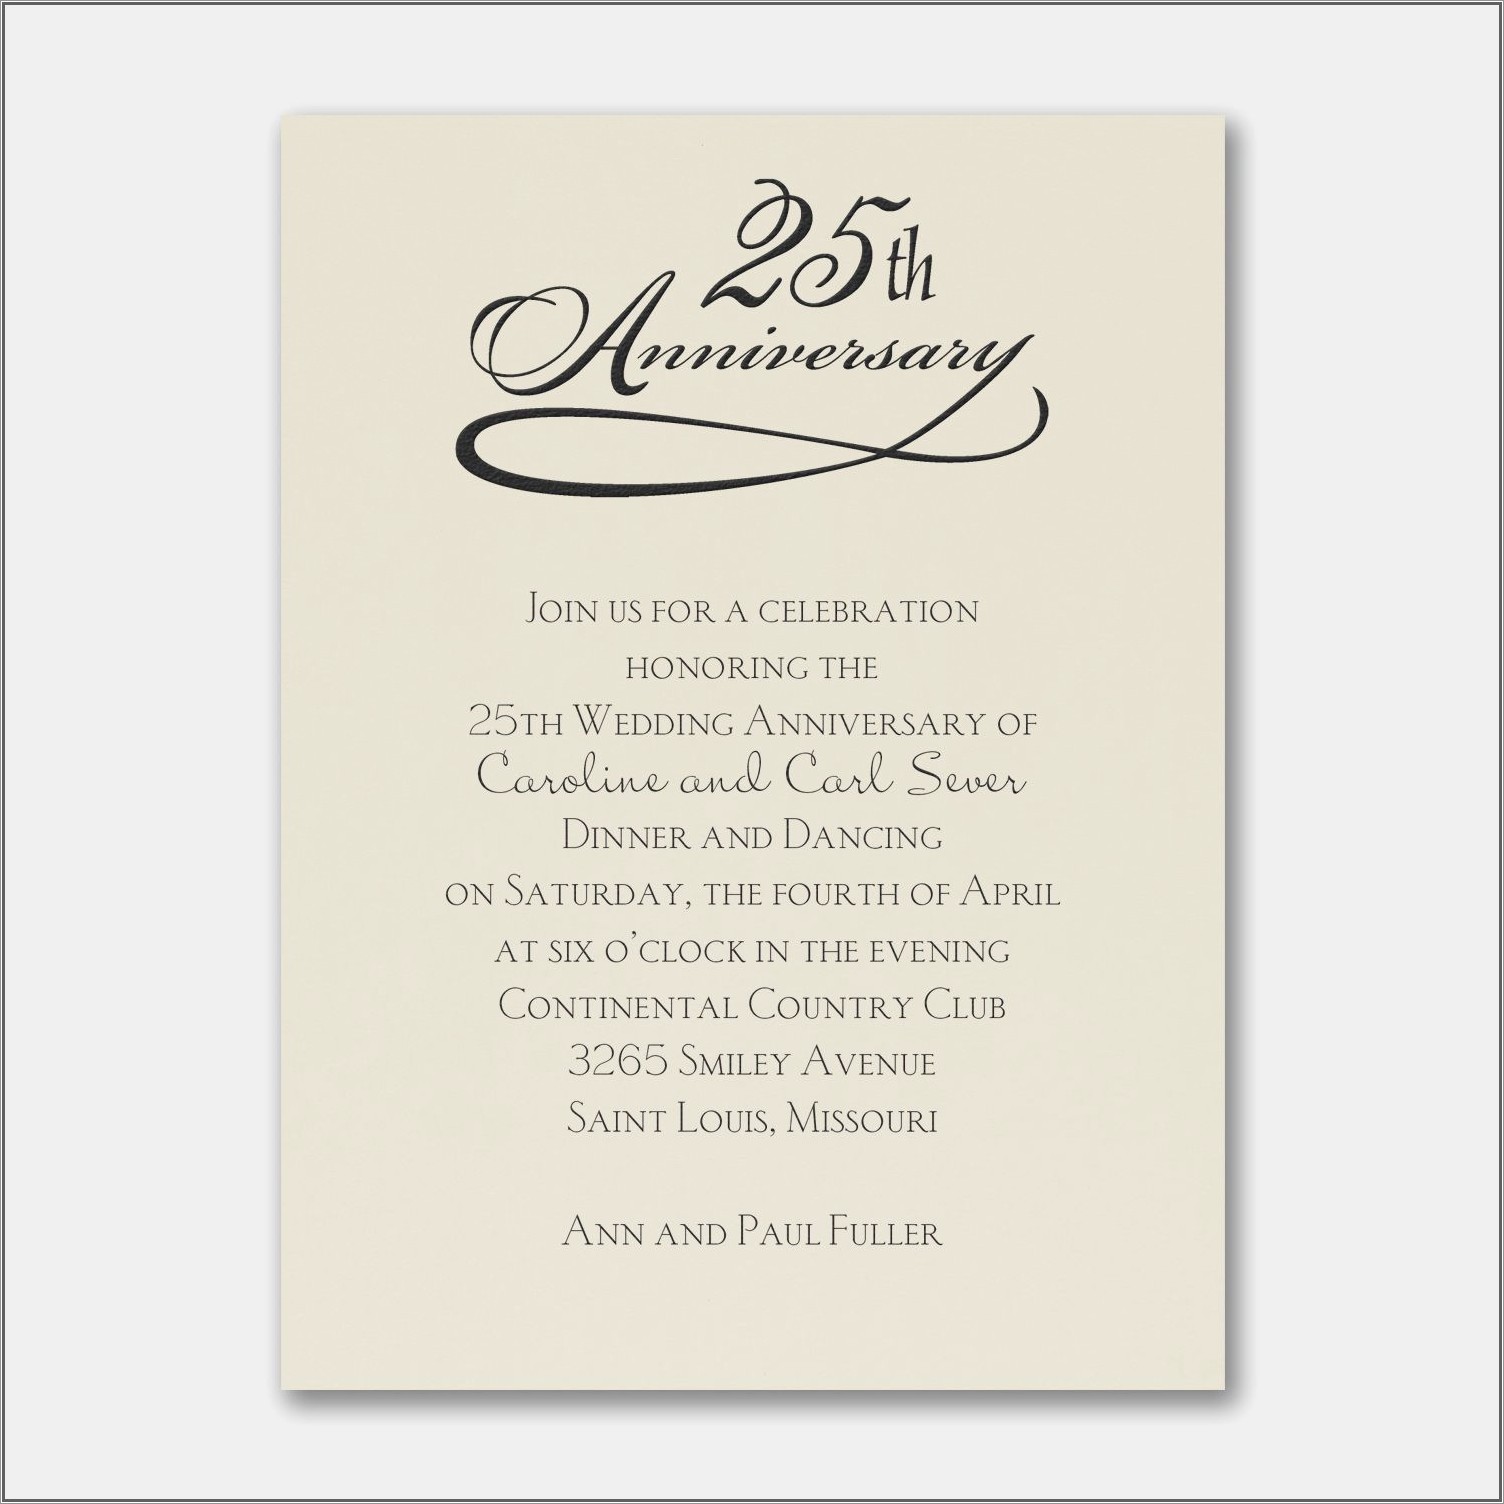 Sample Invitation Card For Golden Wedding Anniversary